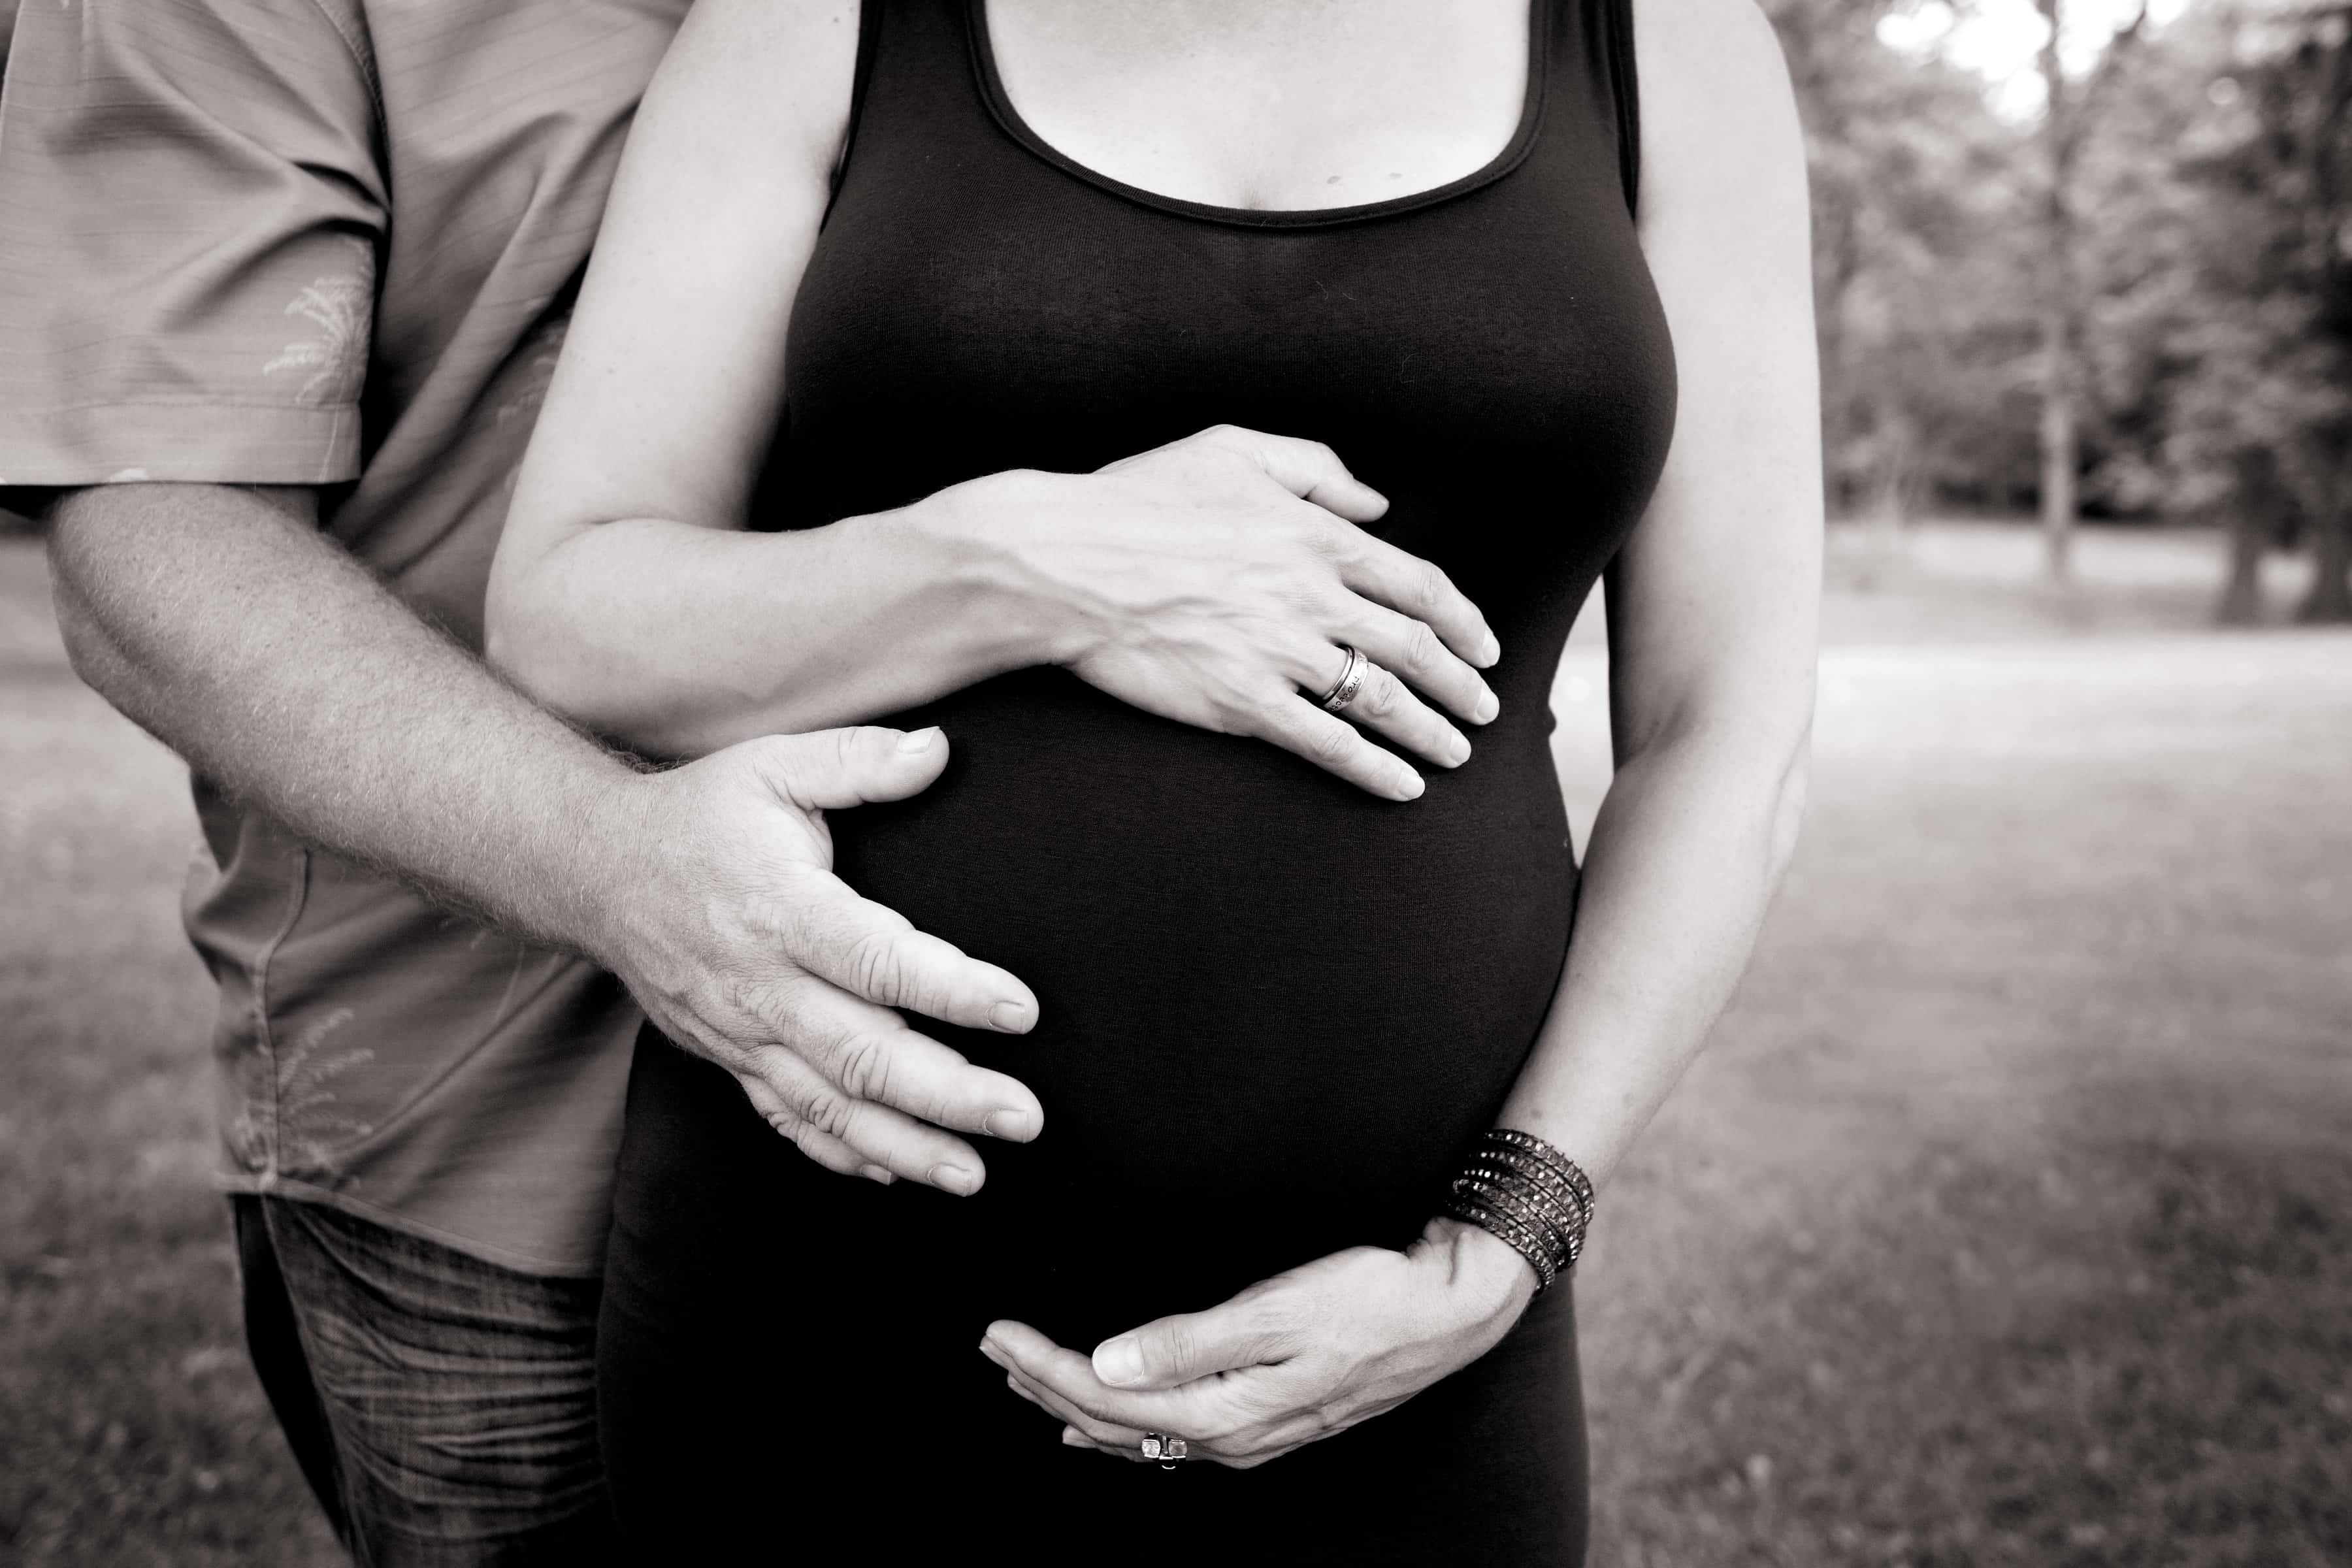 ivf pregnancy, maternity photos